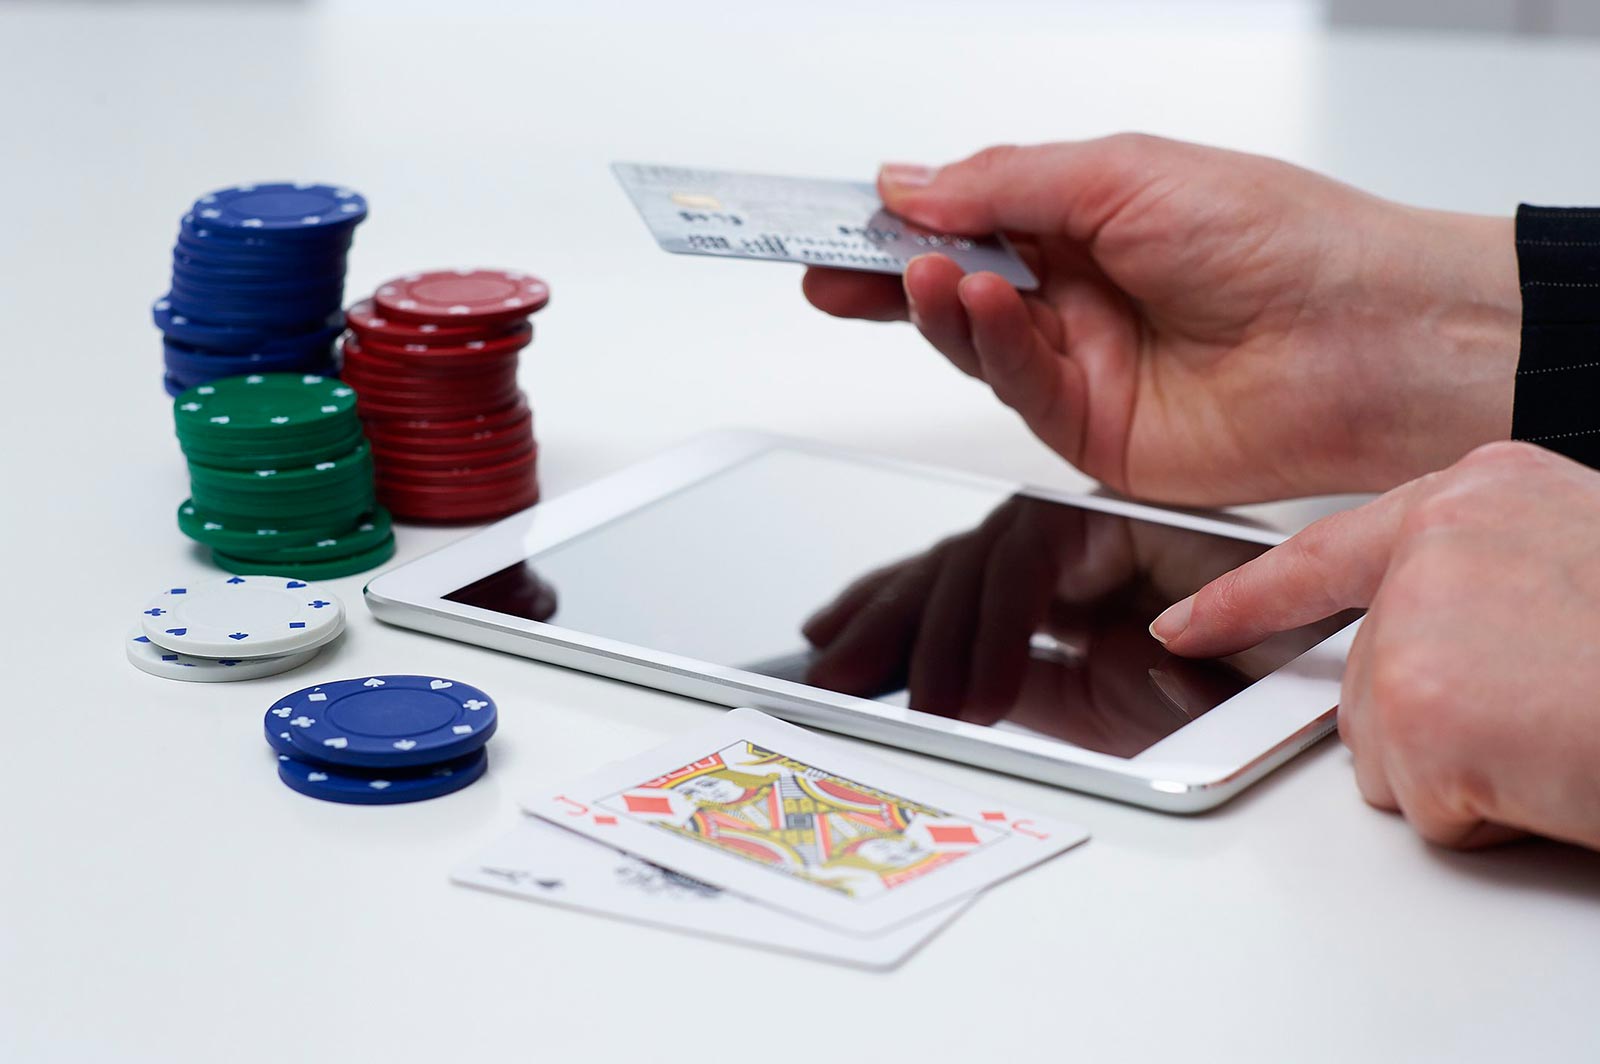 online casino mobile deposit